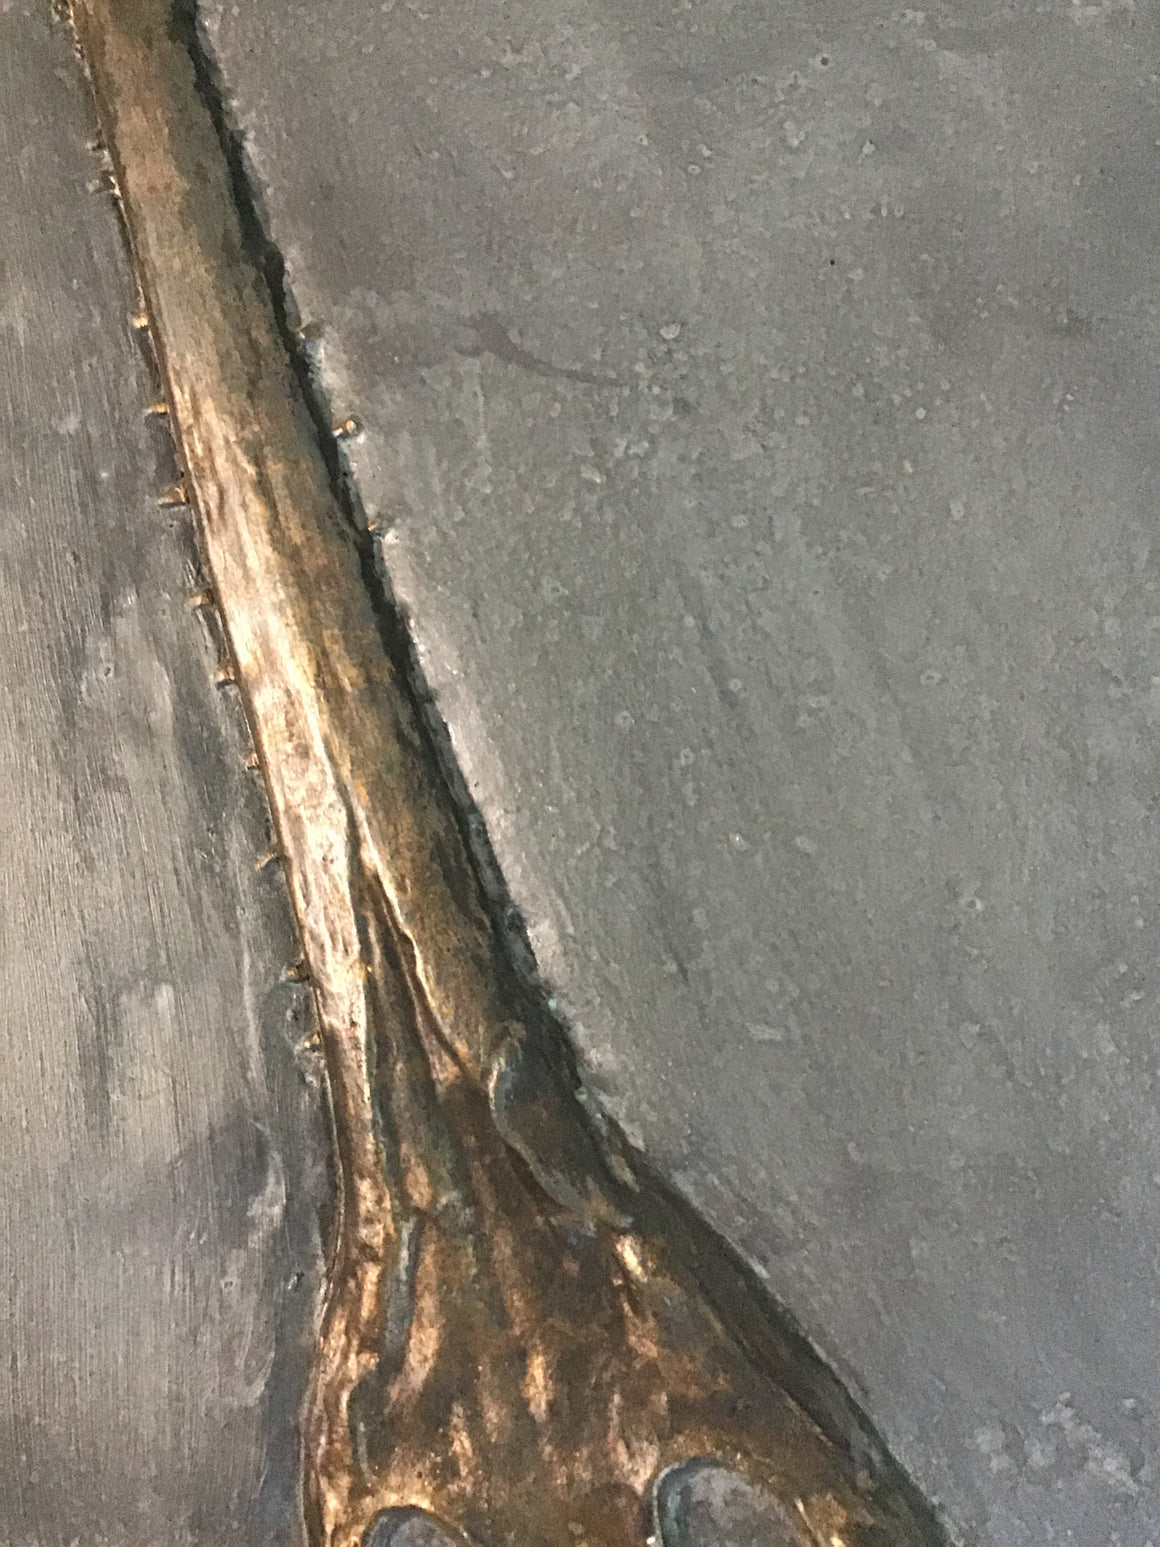 Crocodile Full Skeleton Fossil Replica - On Slab from the Jurassic - 7 ft x 29"